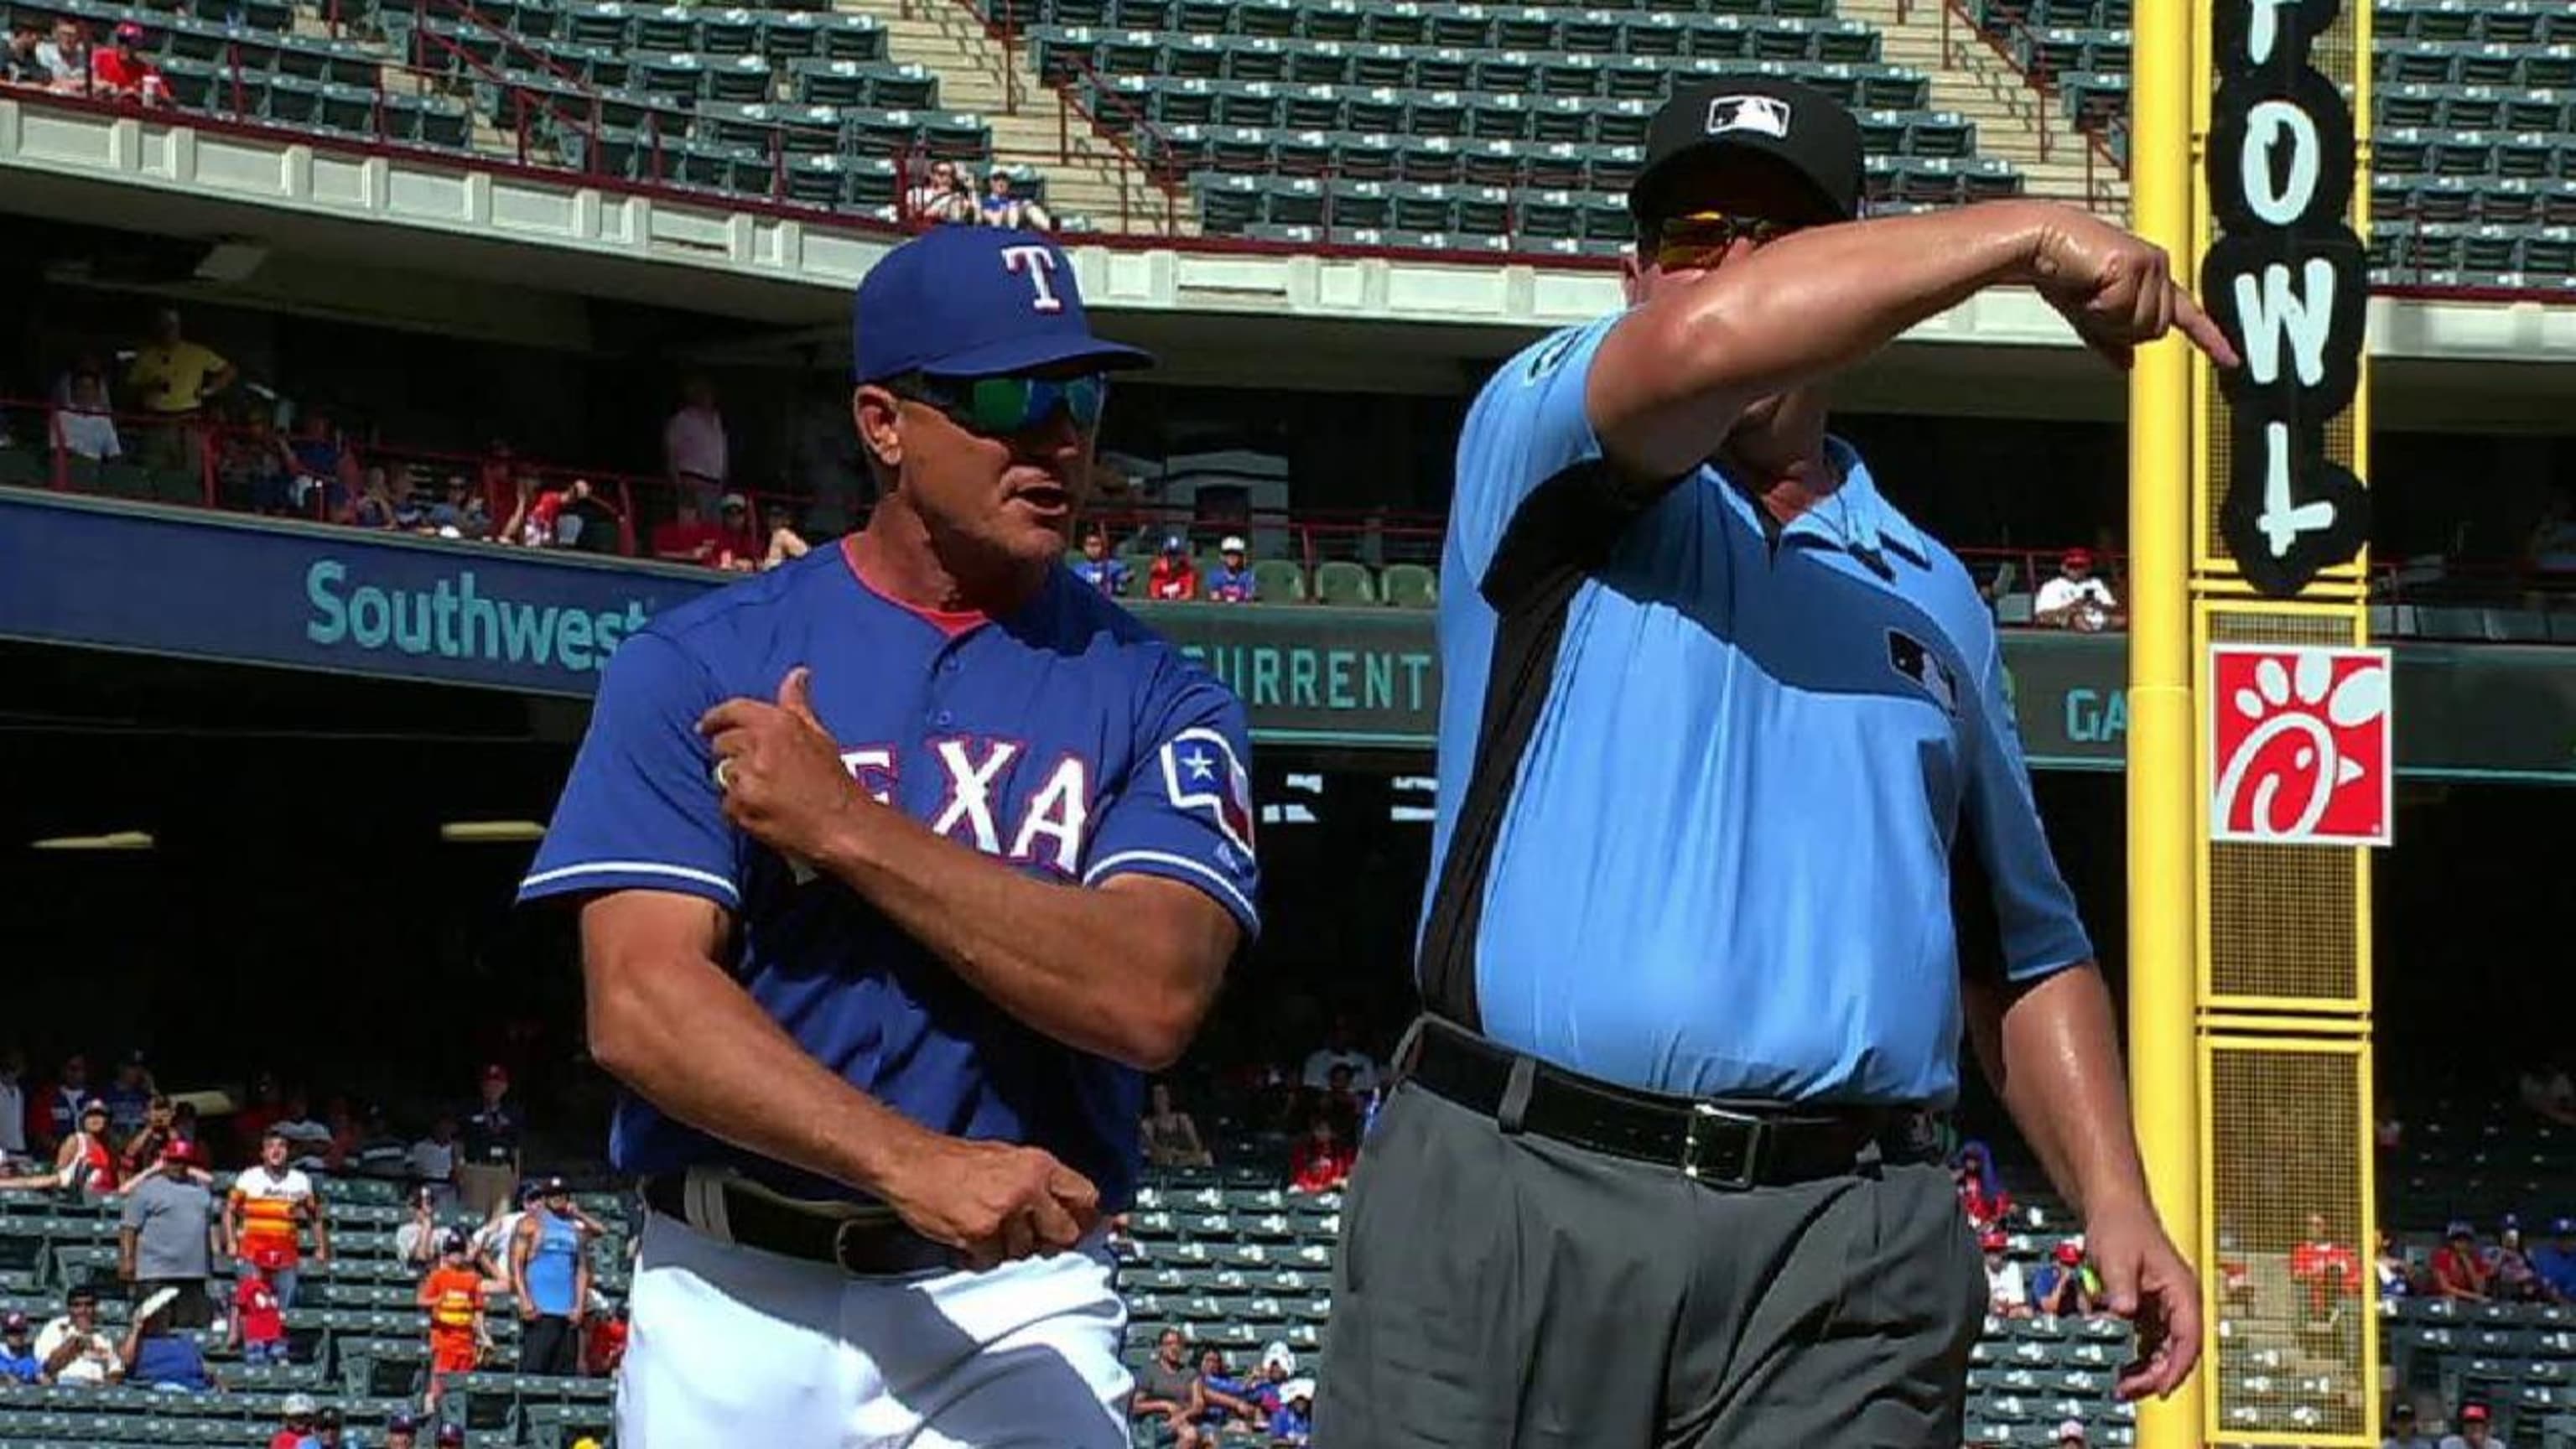 New York Yankees hope to slow down Ronald Guzman, Texas Rangers